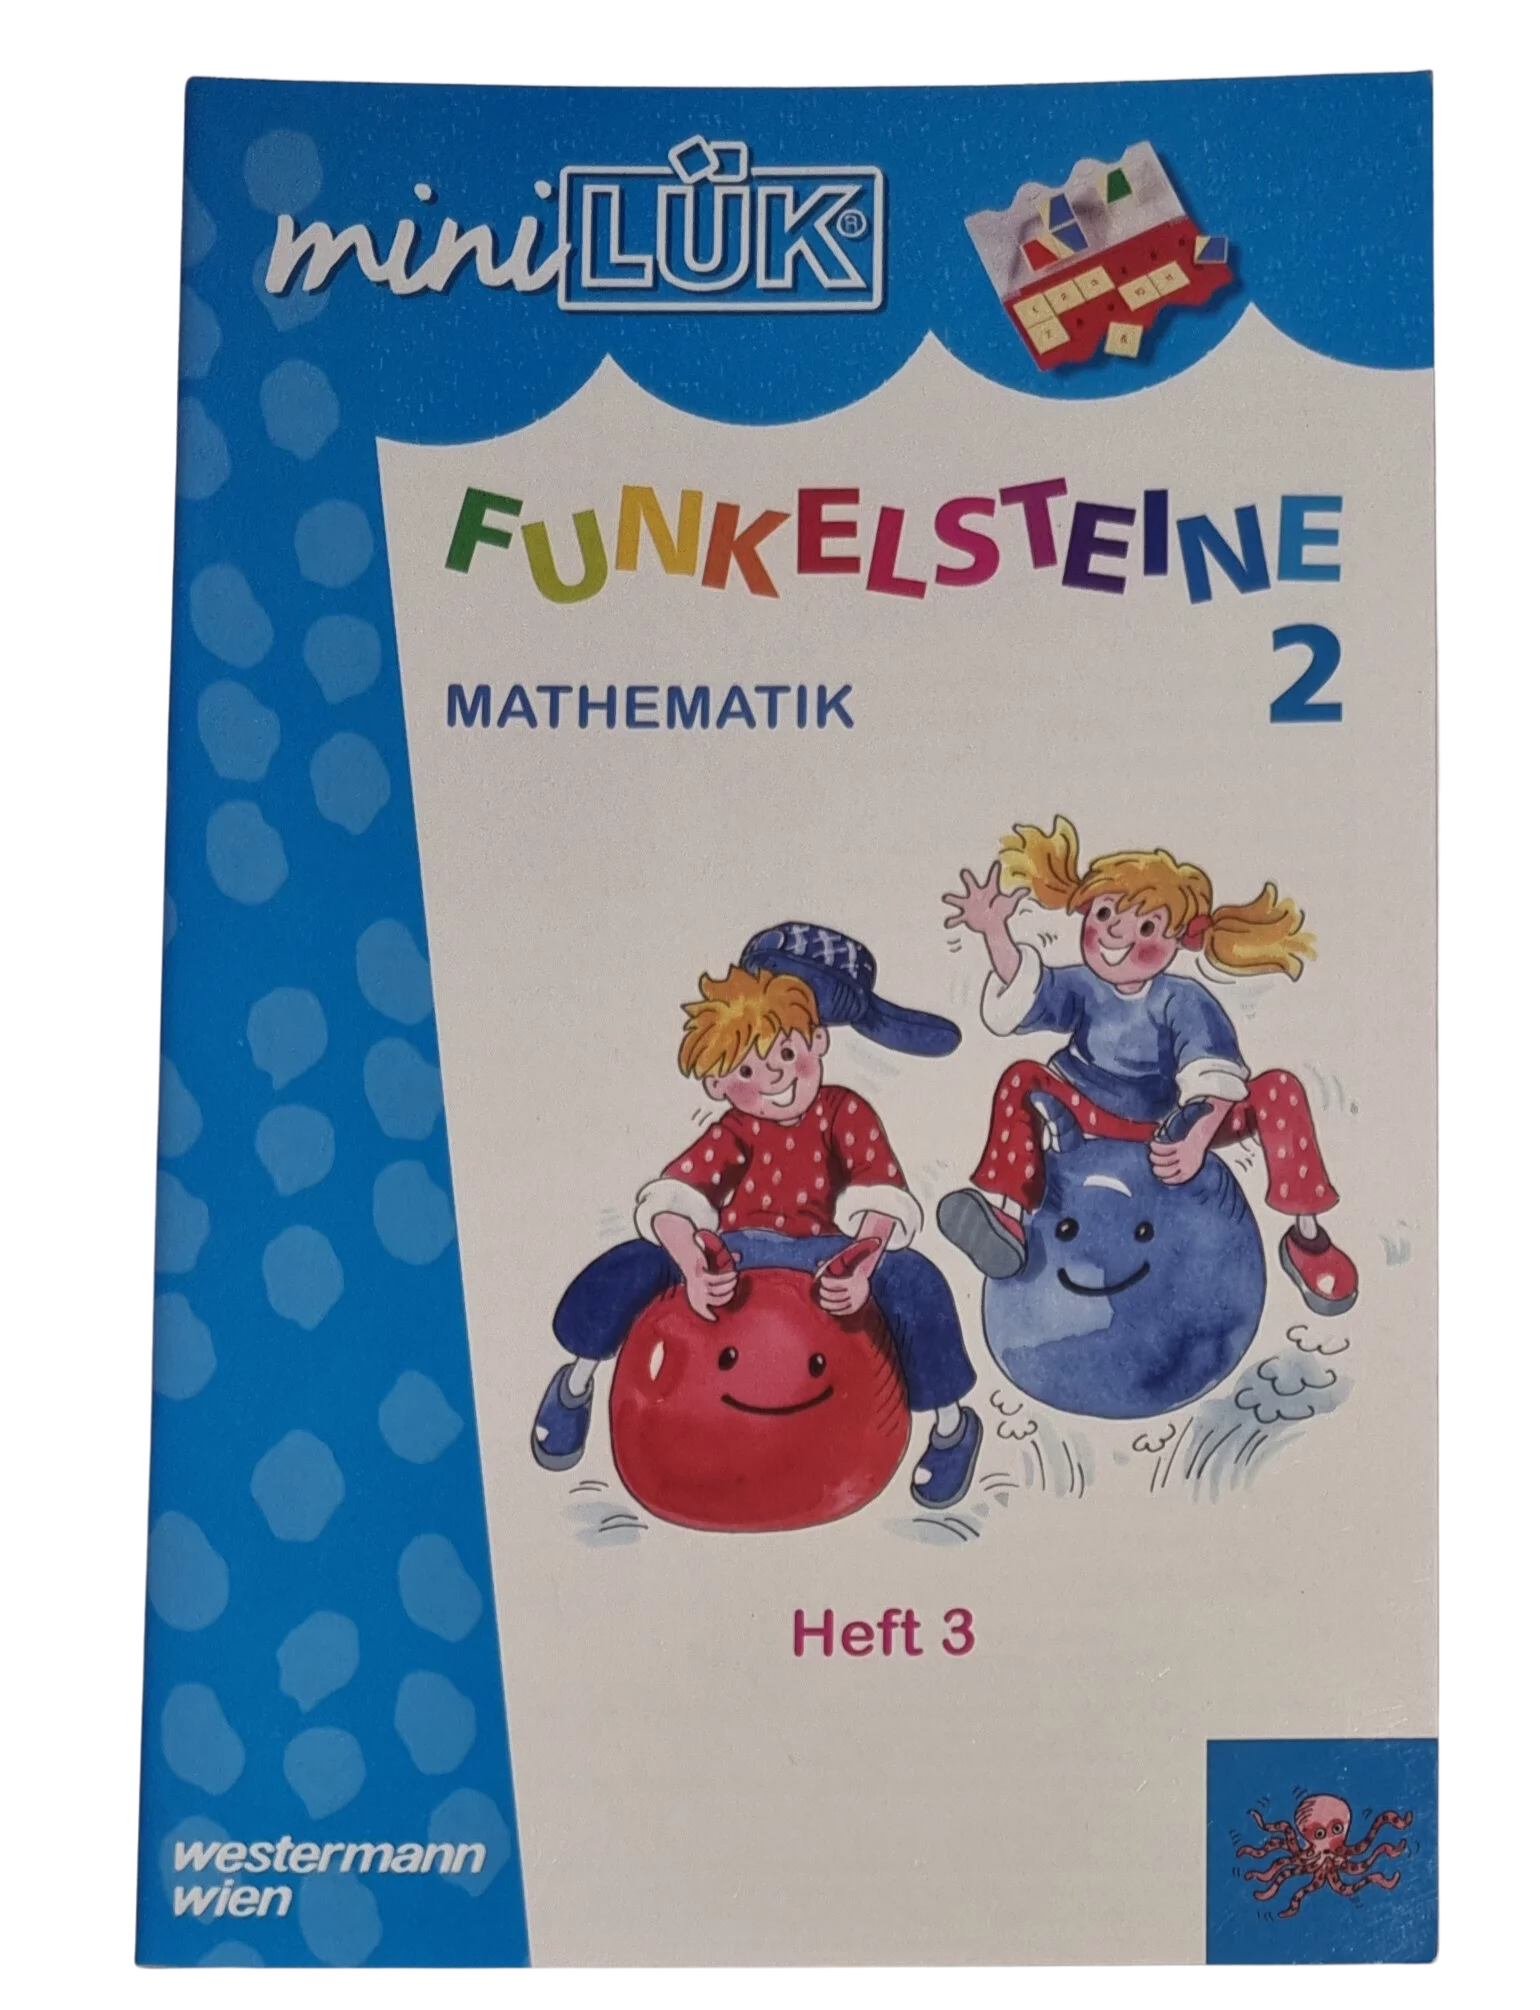 Mini Lük Funkelsteine 2 Mathematik Heft 3